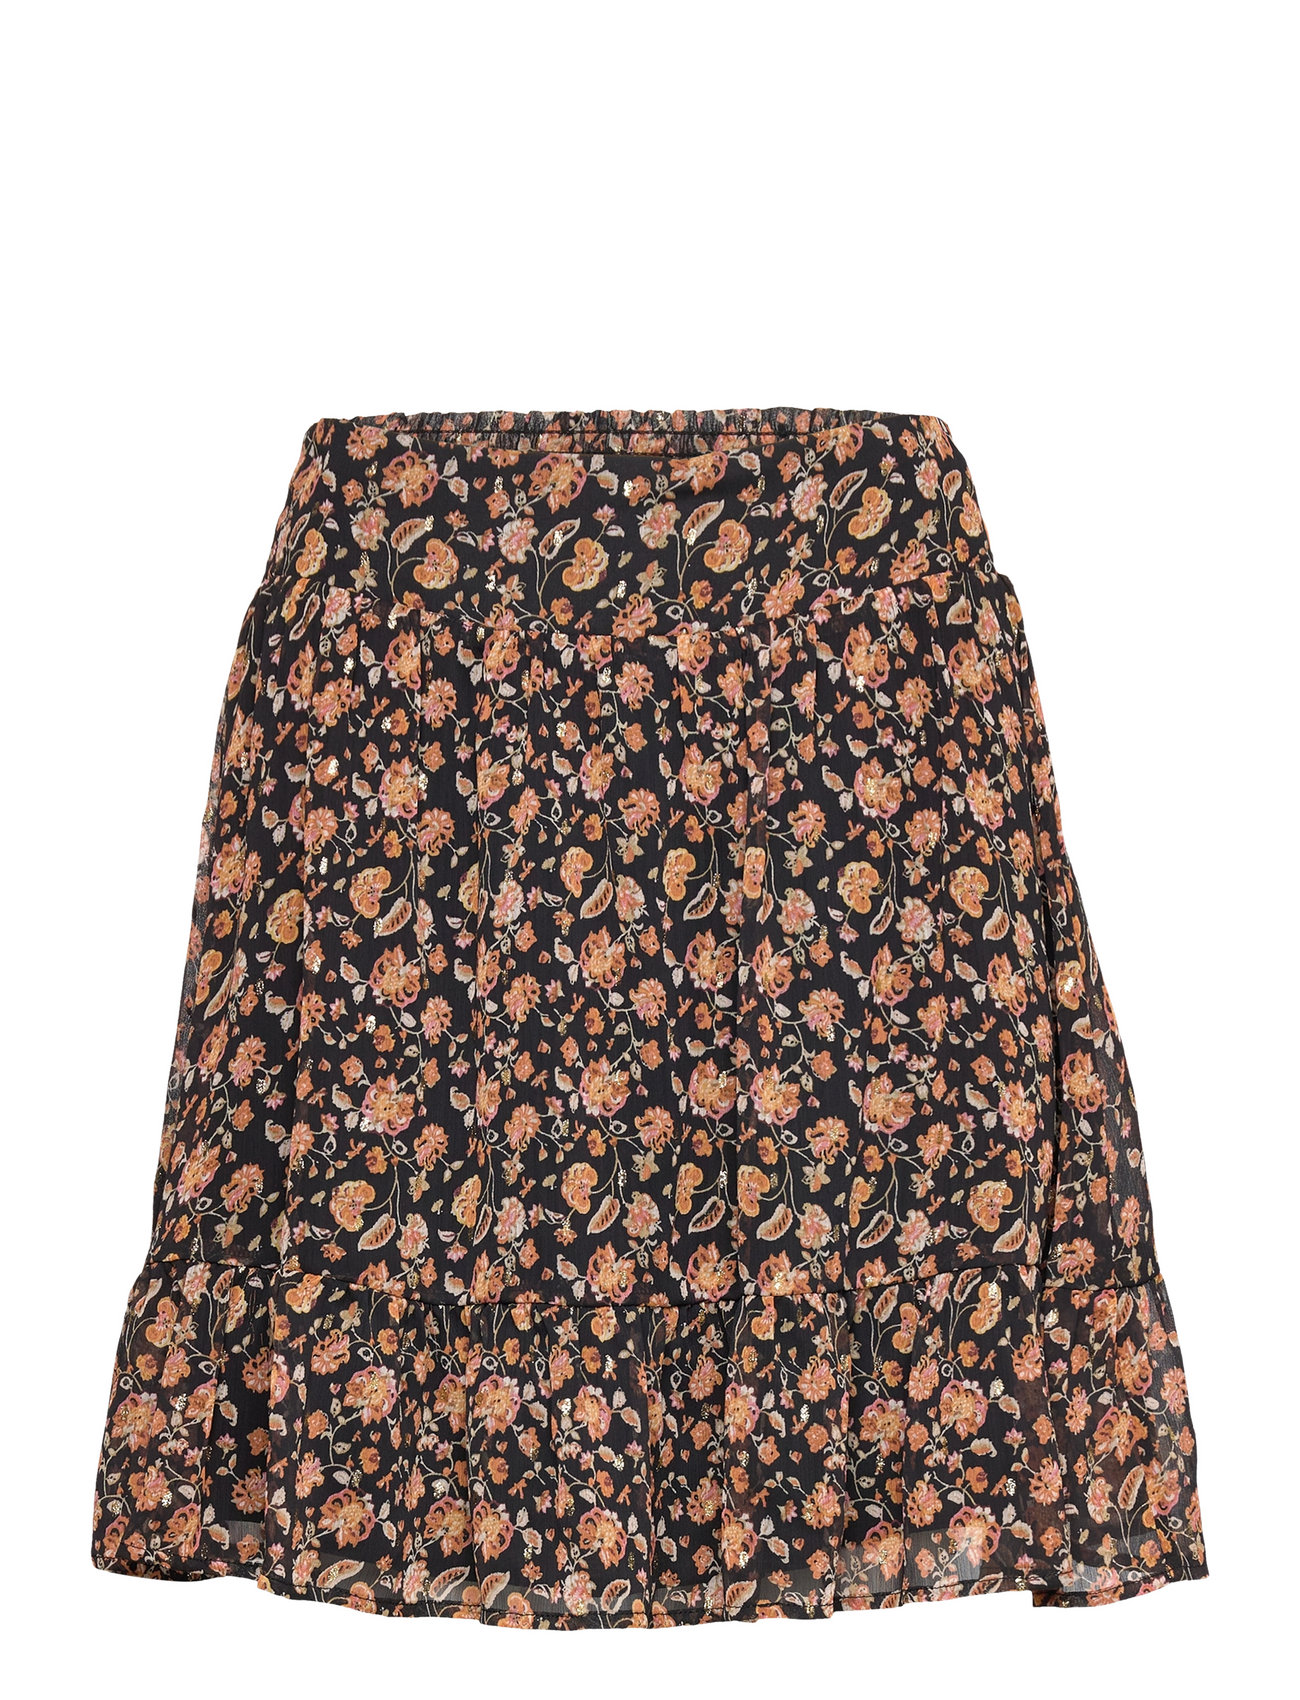 Camilla Pihl Mille Skirt - Short skirts - Boozt.com